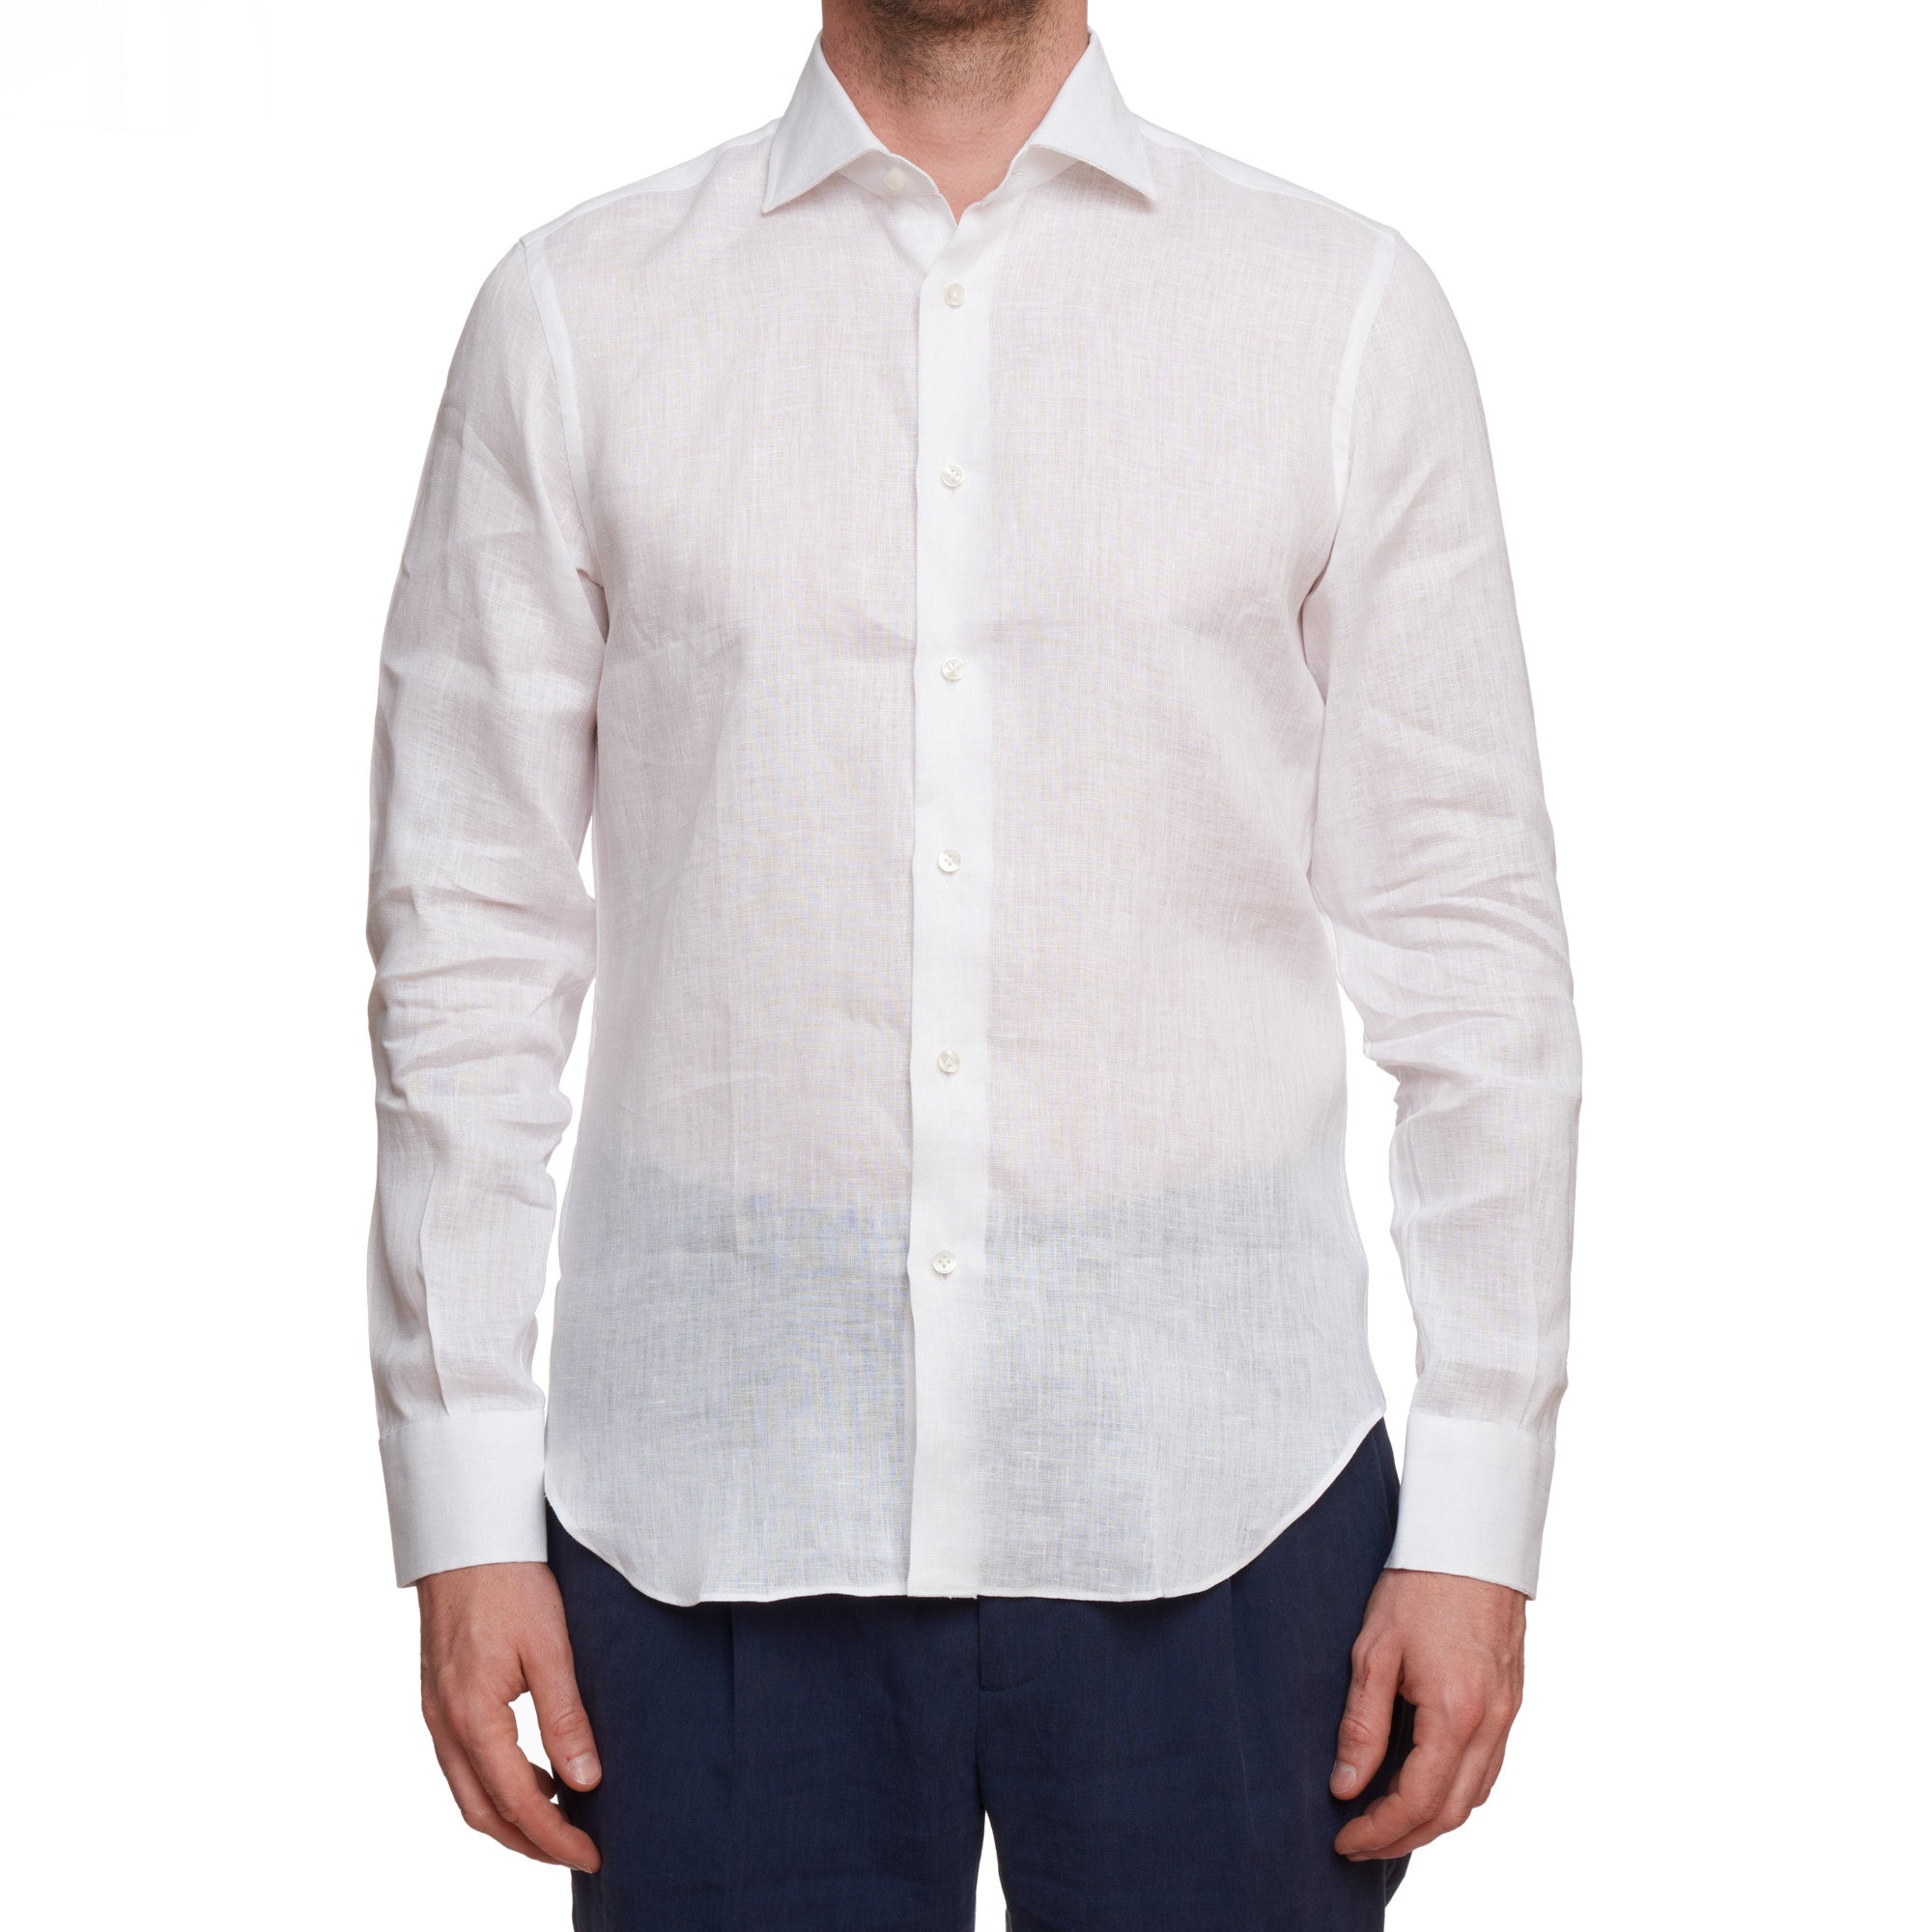 SARTORIO Napoli by KITON White Linen Spread Collar Shirt Slim Fit NEW SARTORIO